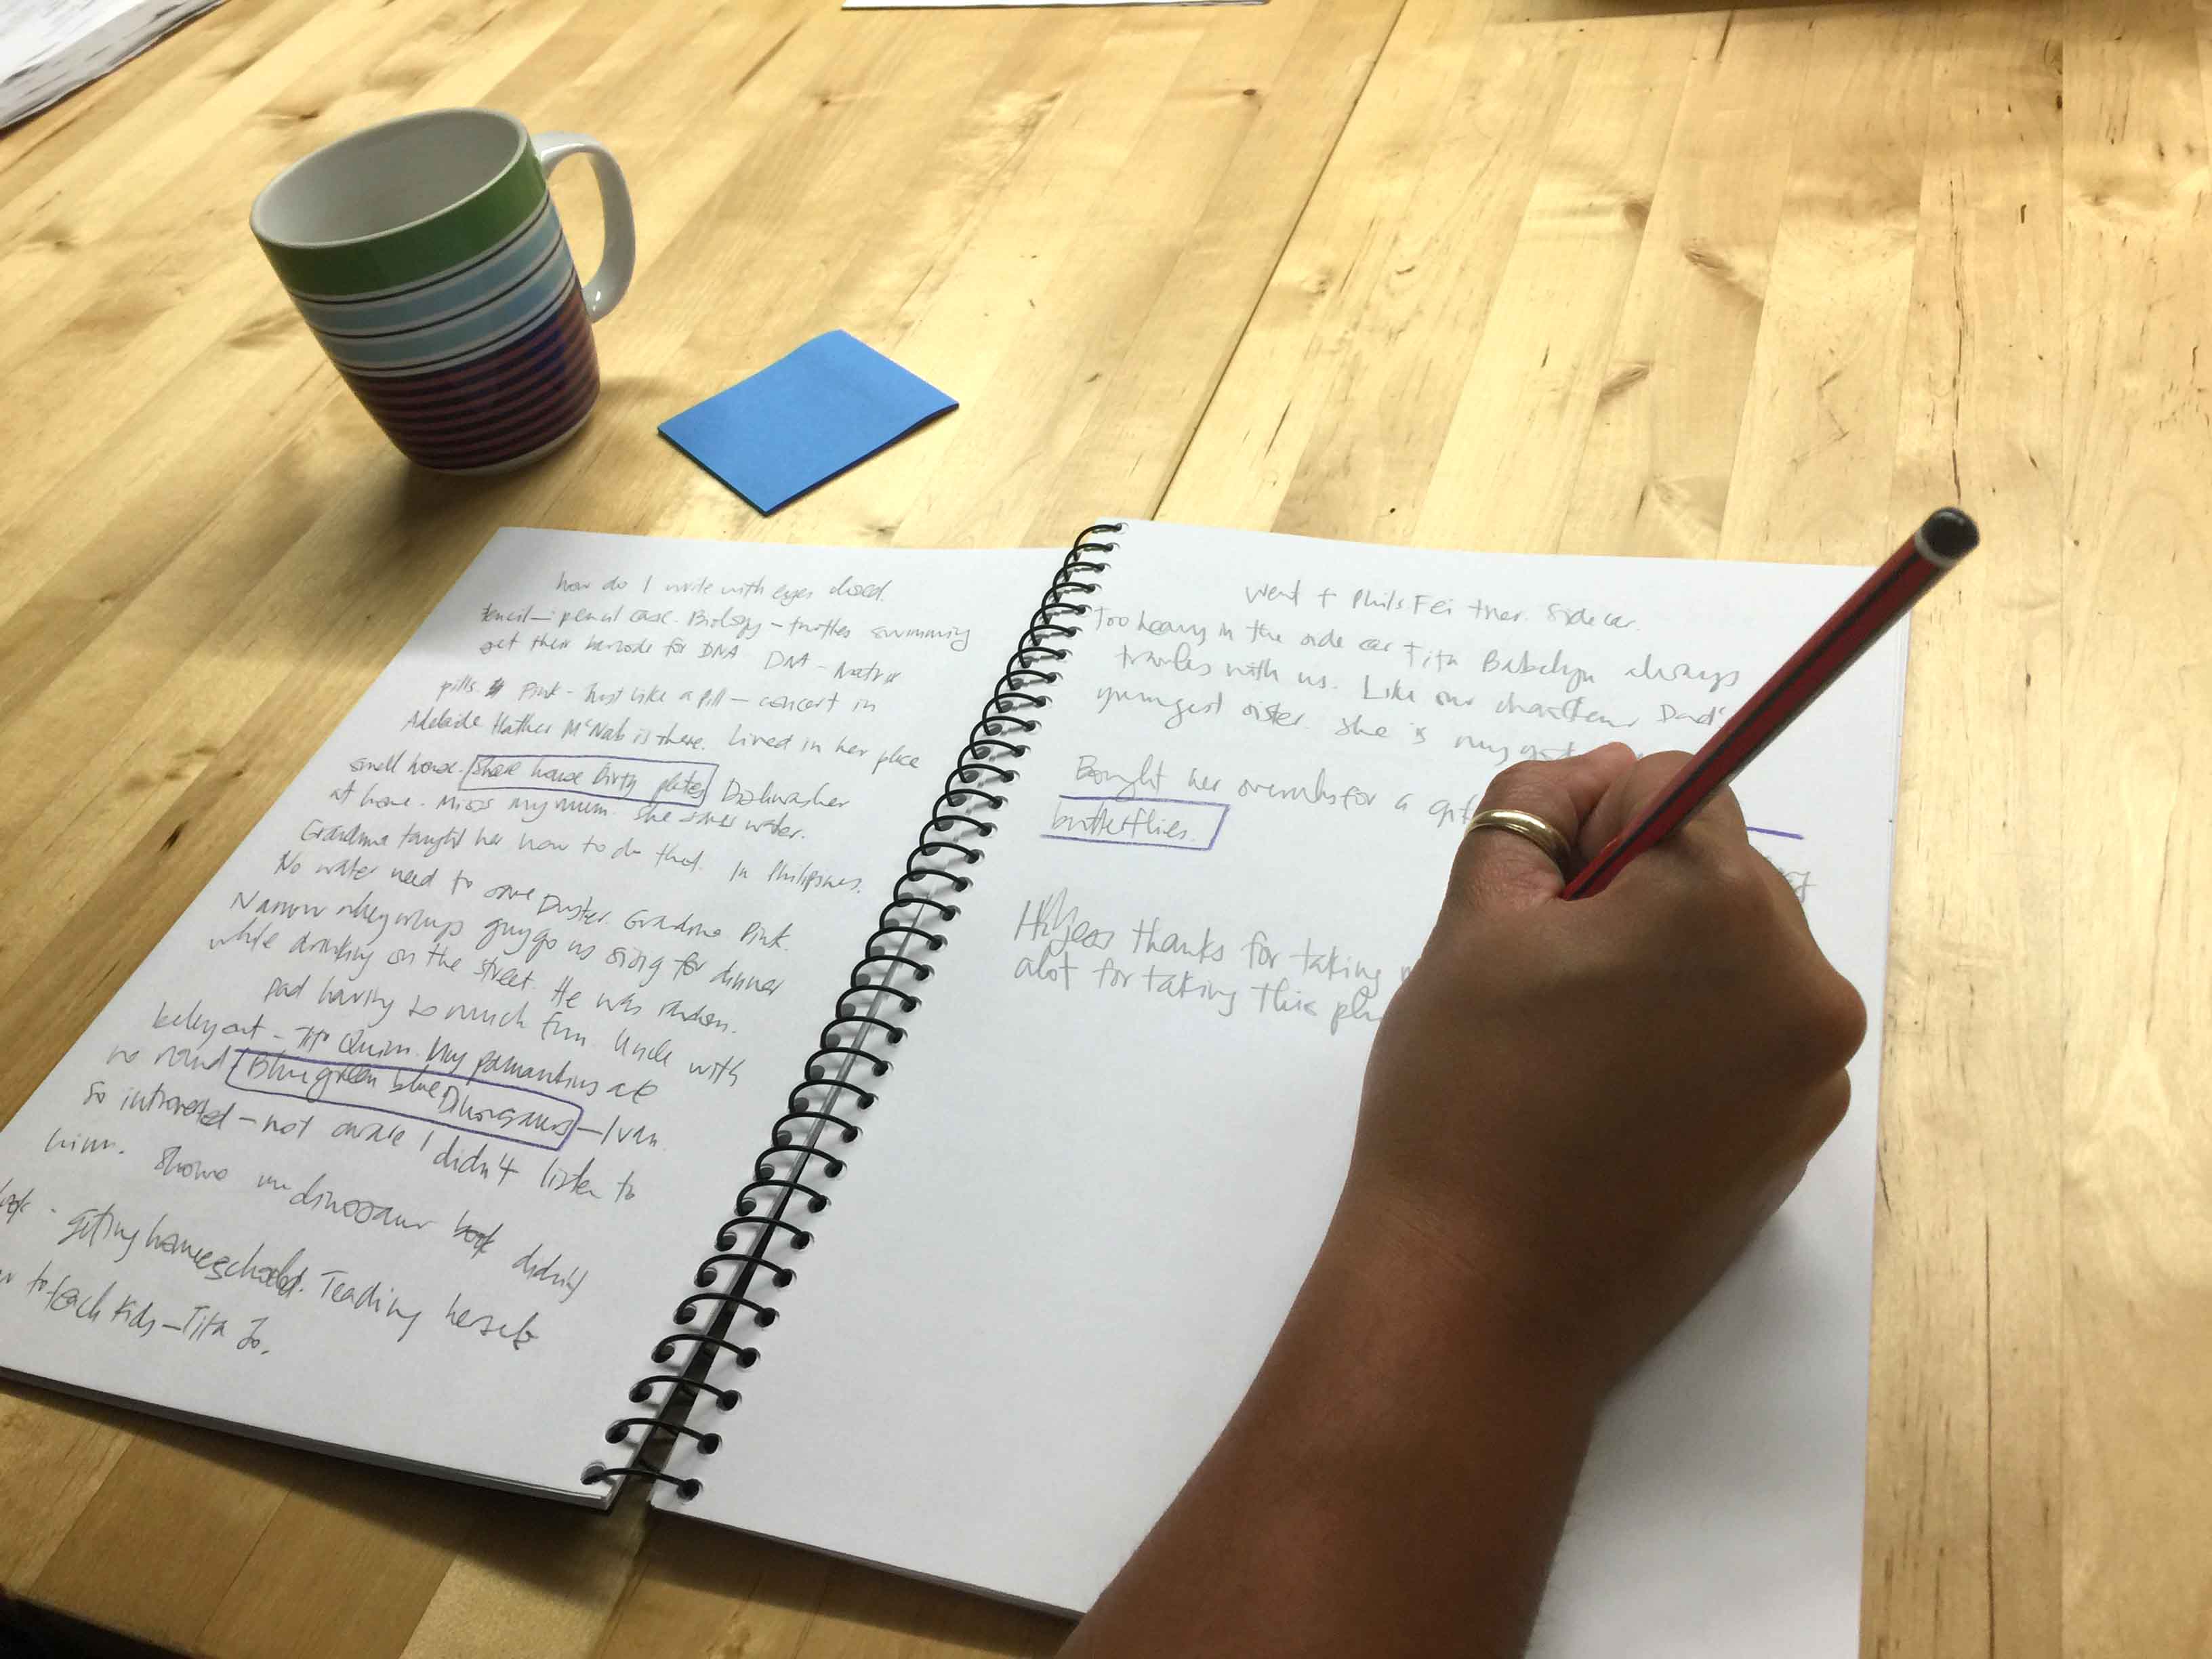 Writing 5 marks. Write картинка. Writing это один из основных. Paper for writing. Writing on the Table.